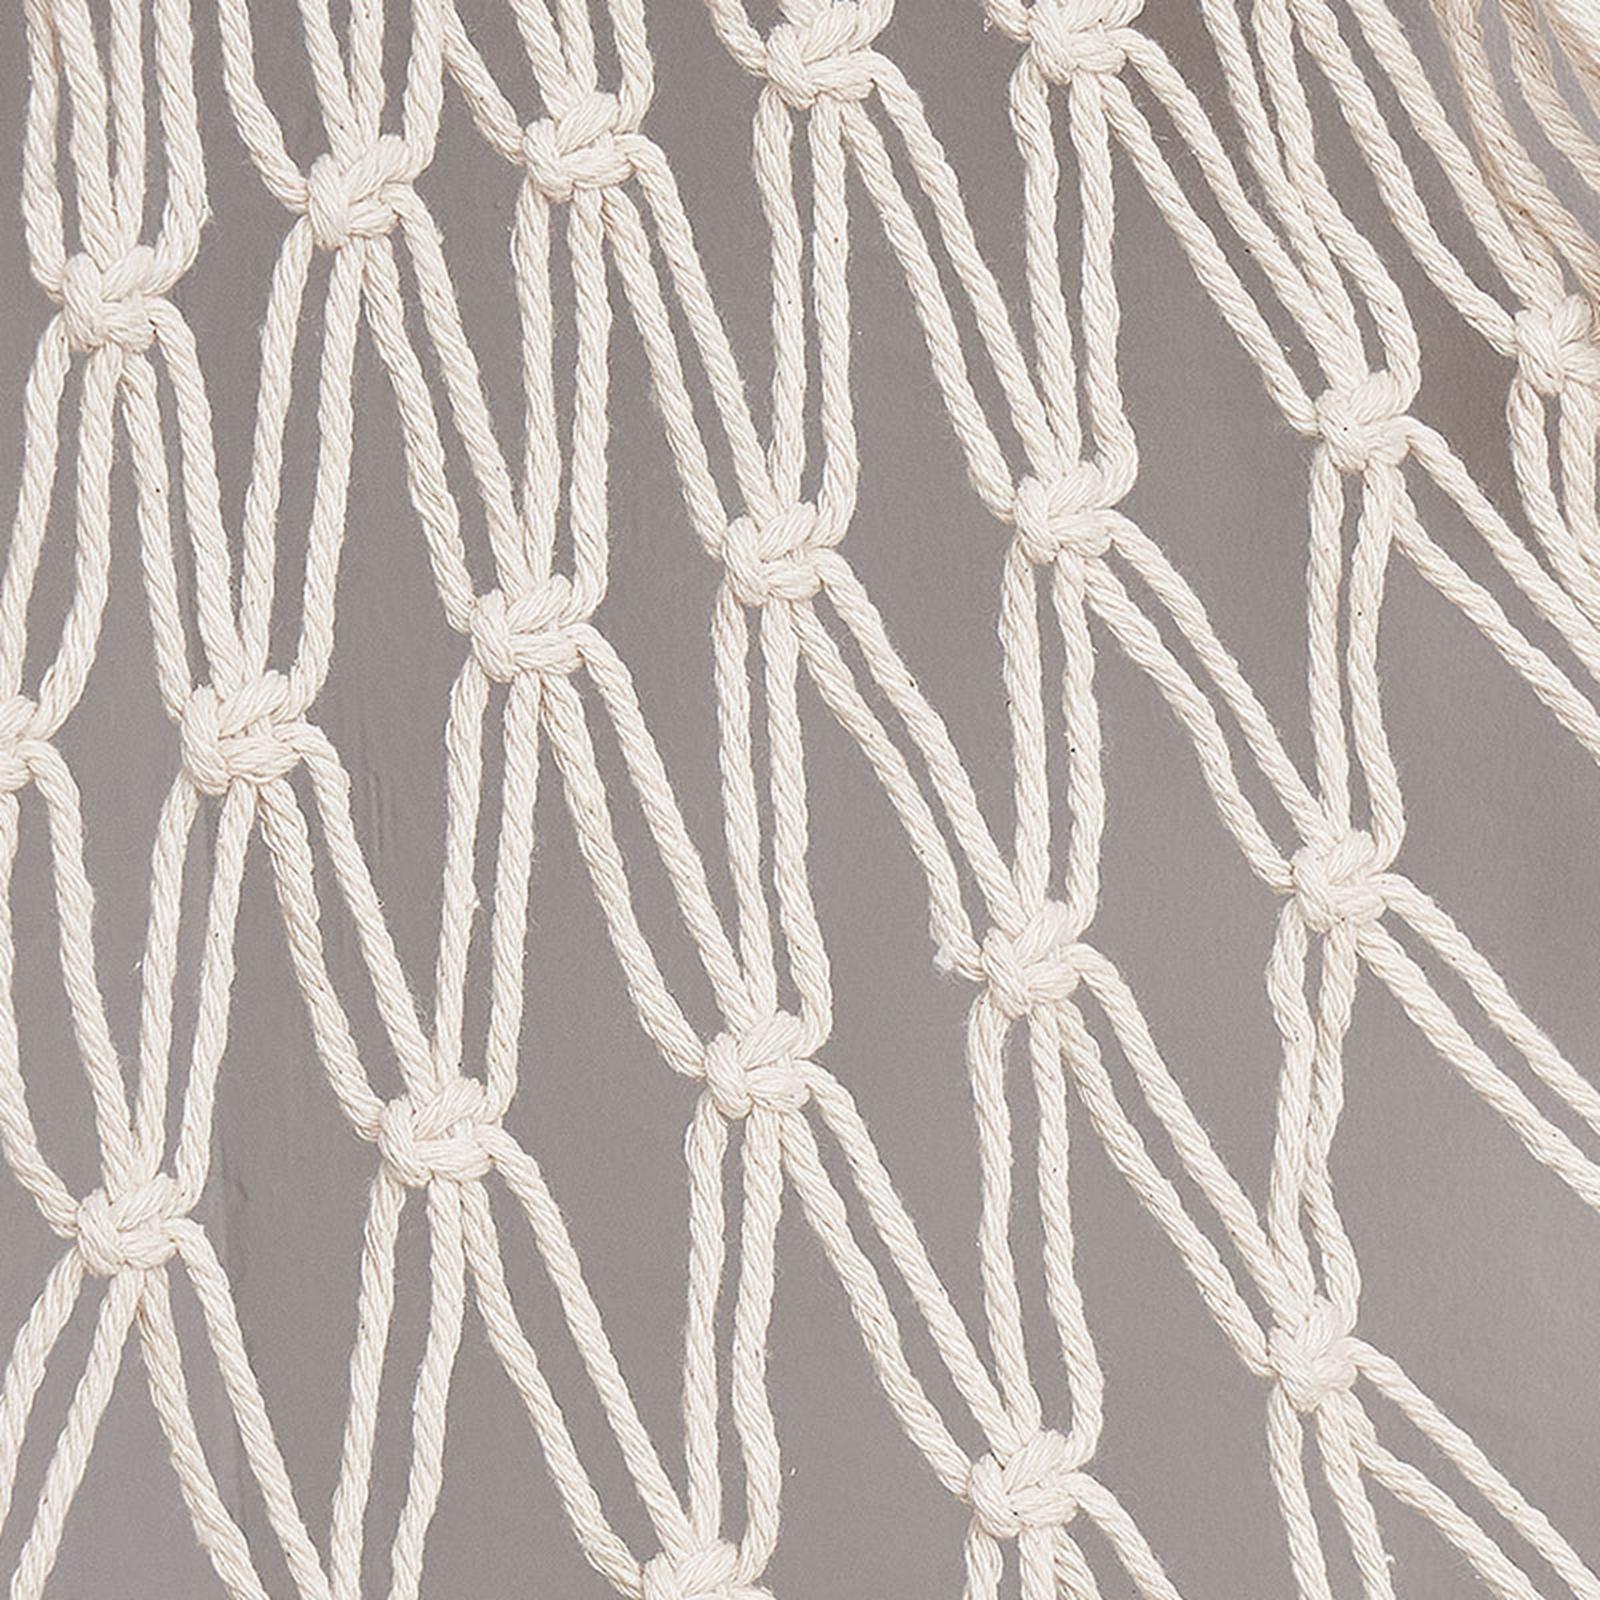 Stuffed Animal Hammock Plush Net Toy Macrame Tassel Decorative Home Display White